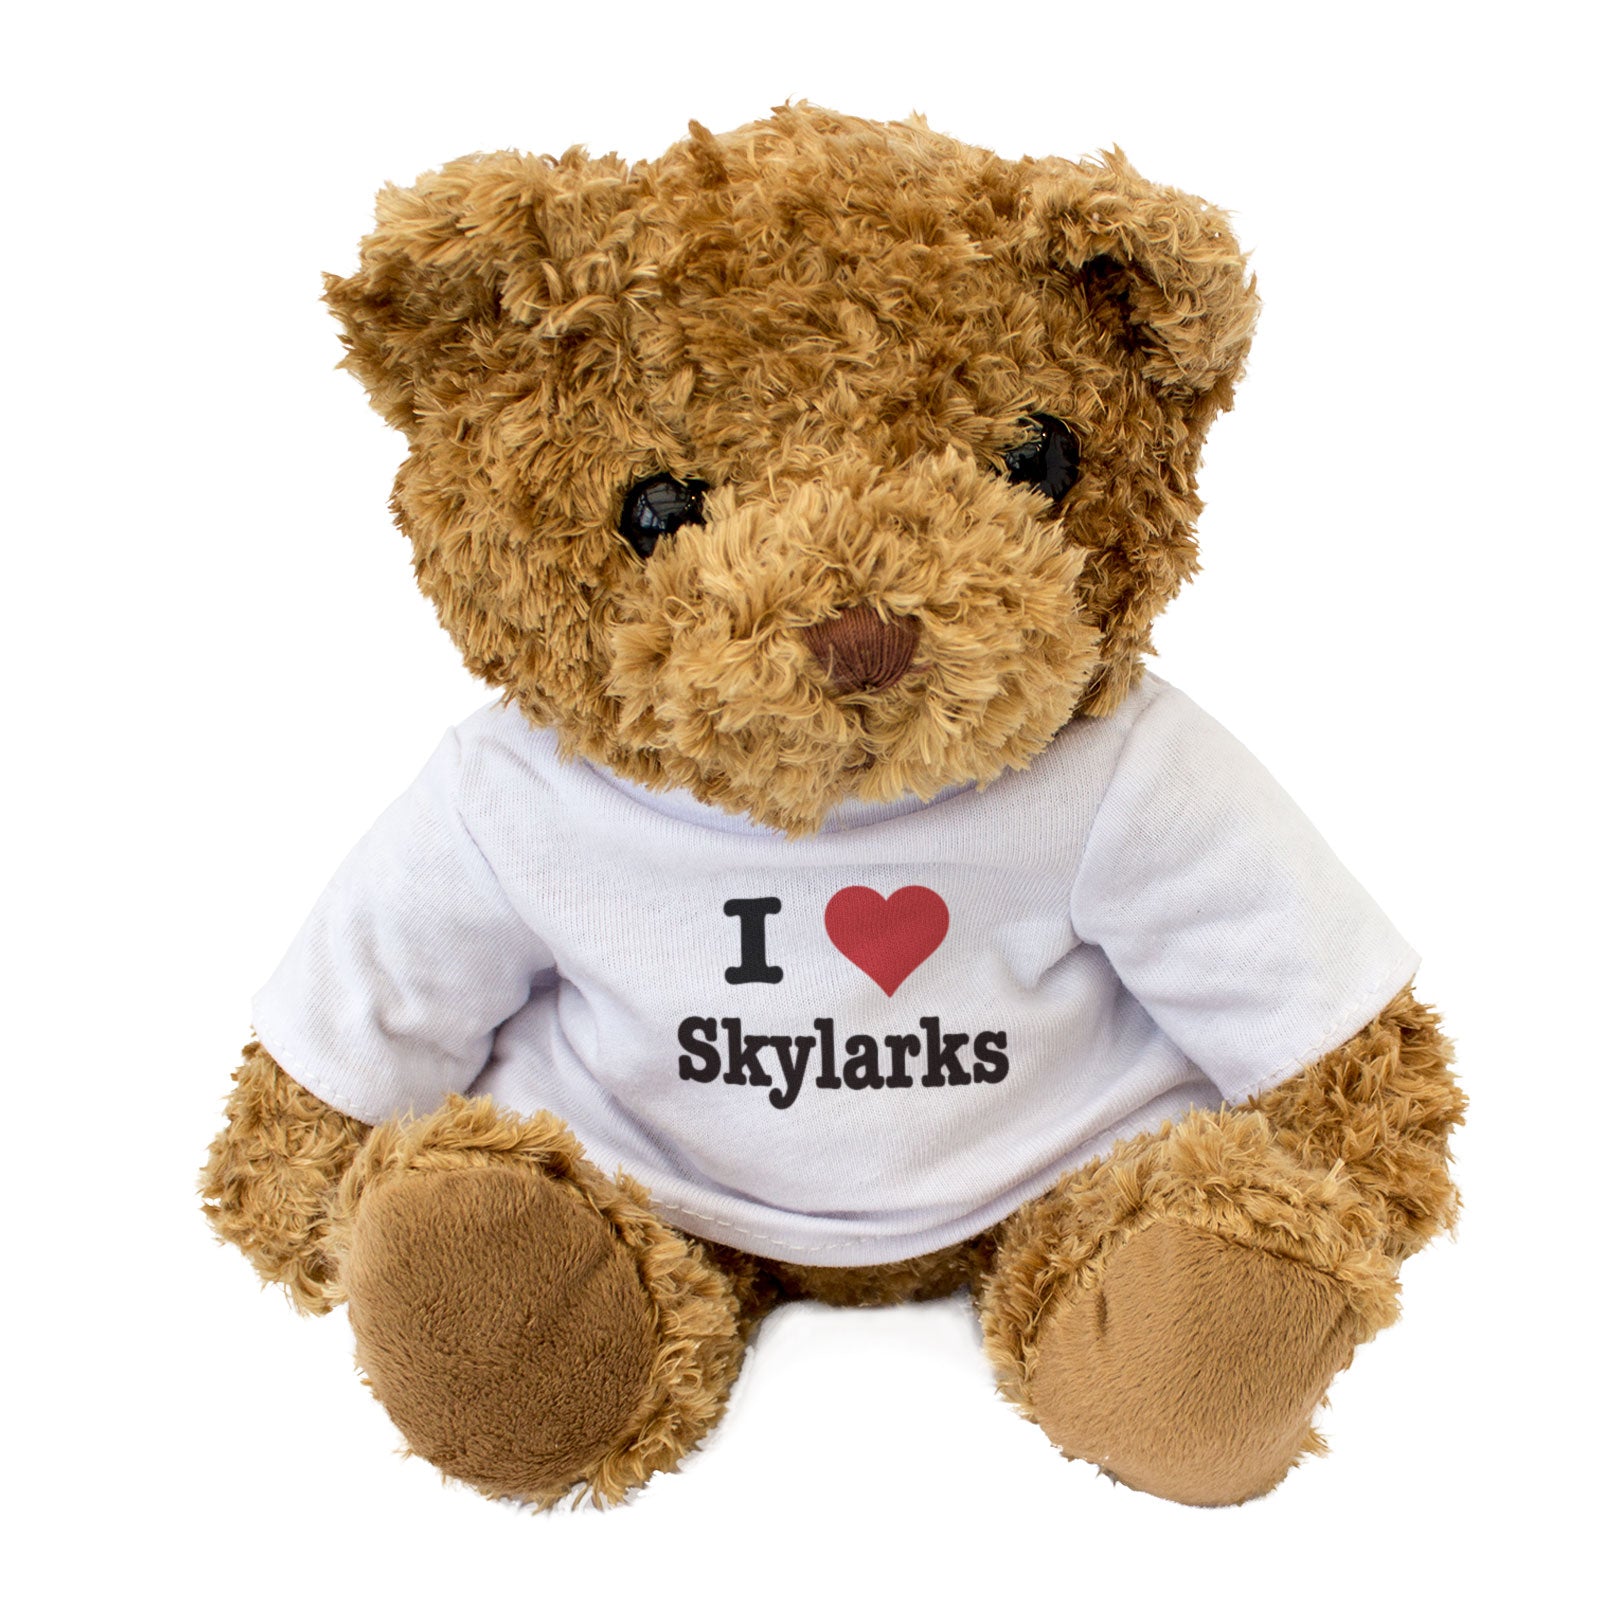 I Love Skylarks - Teddy Bear